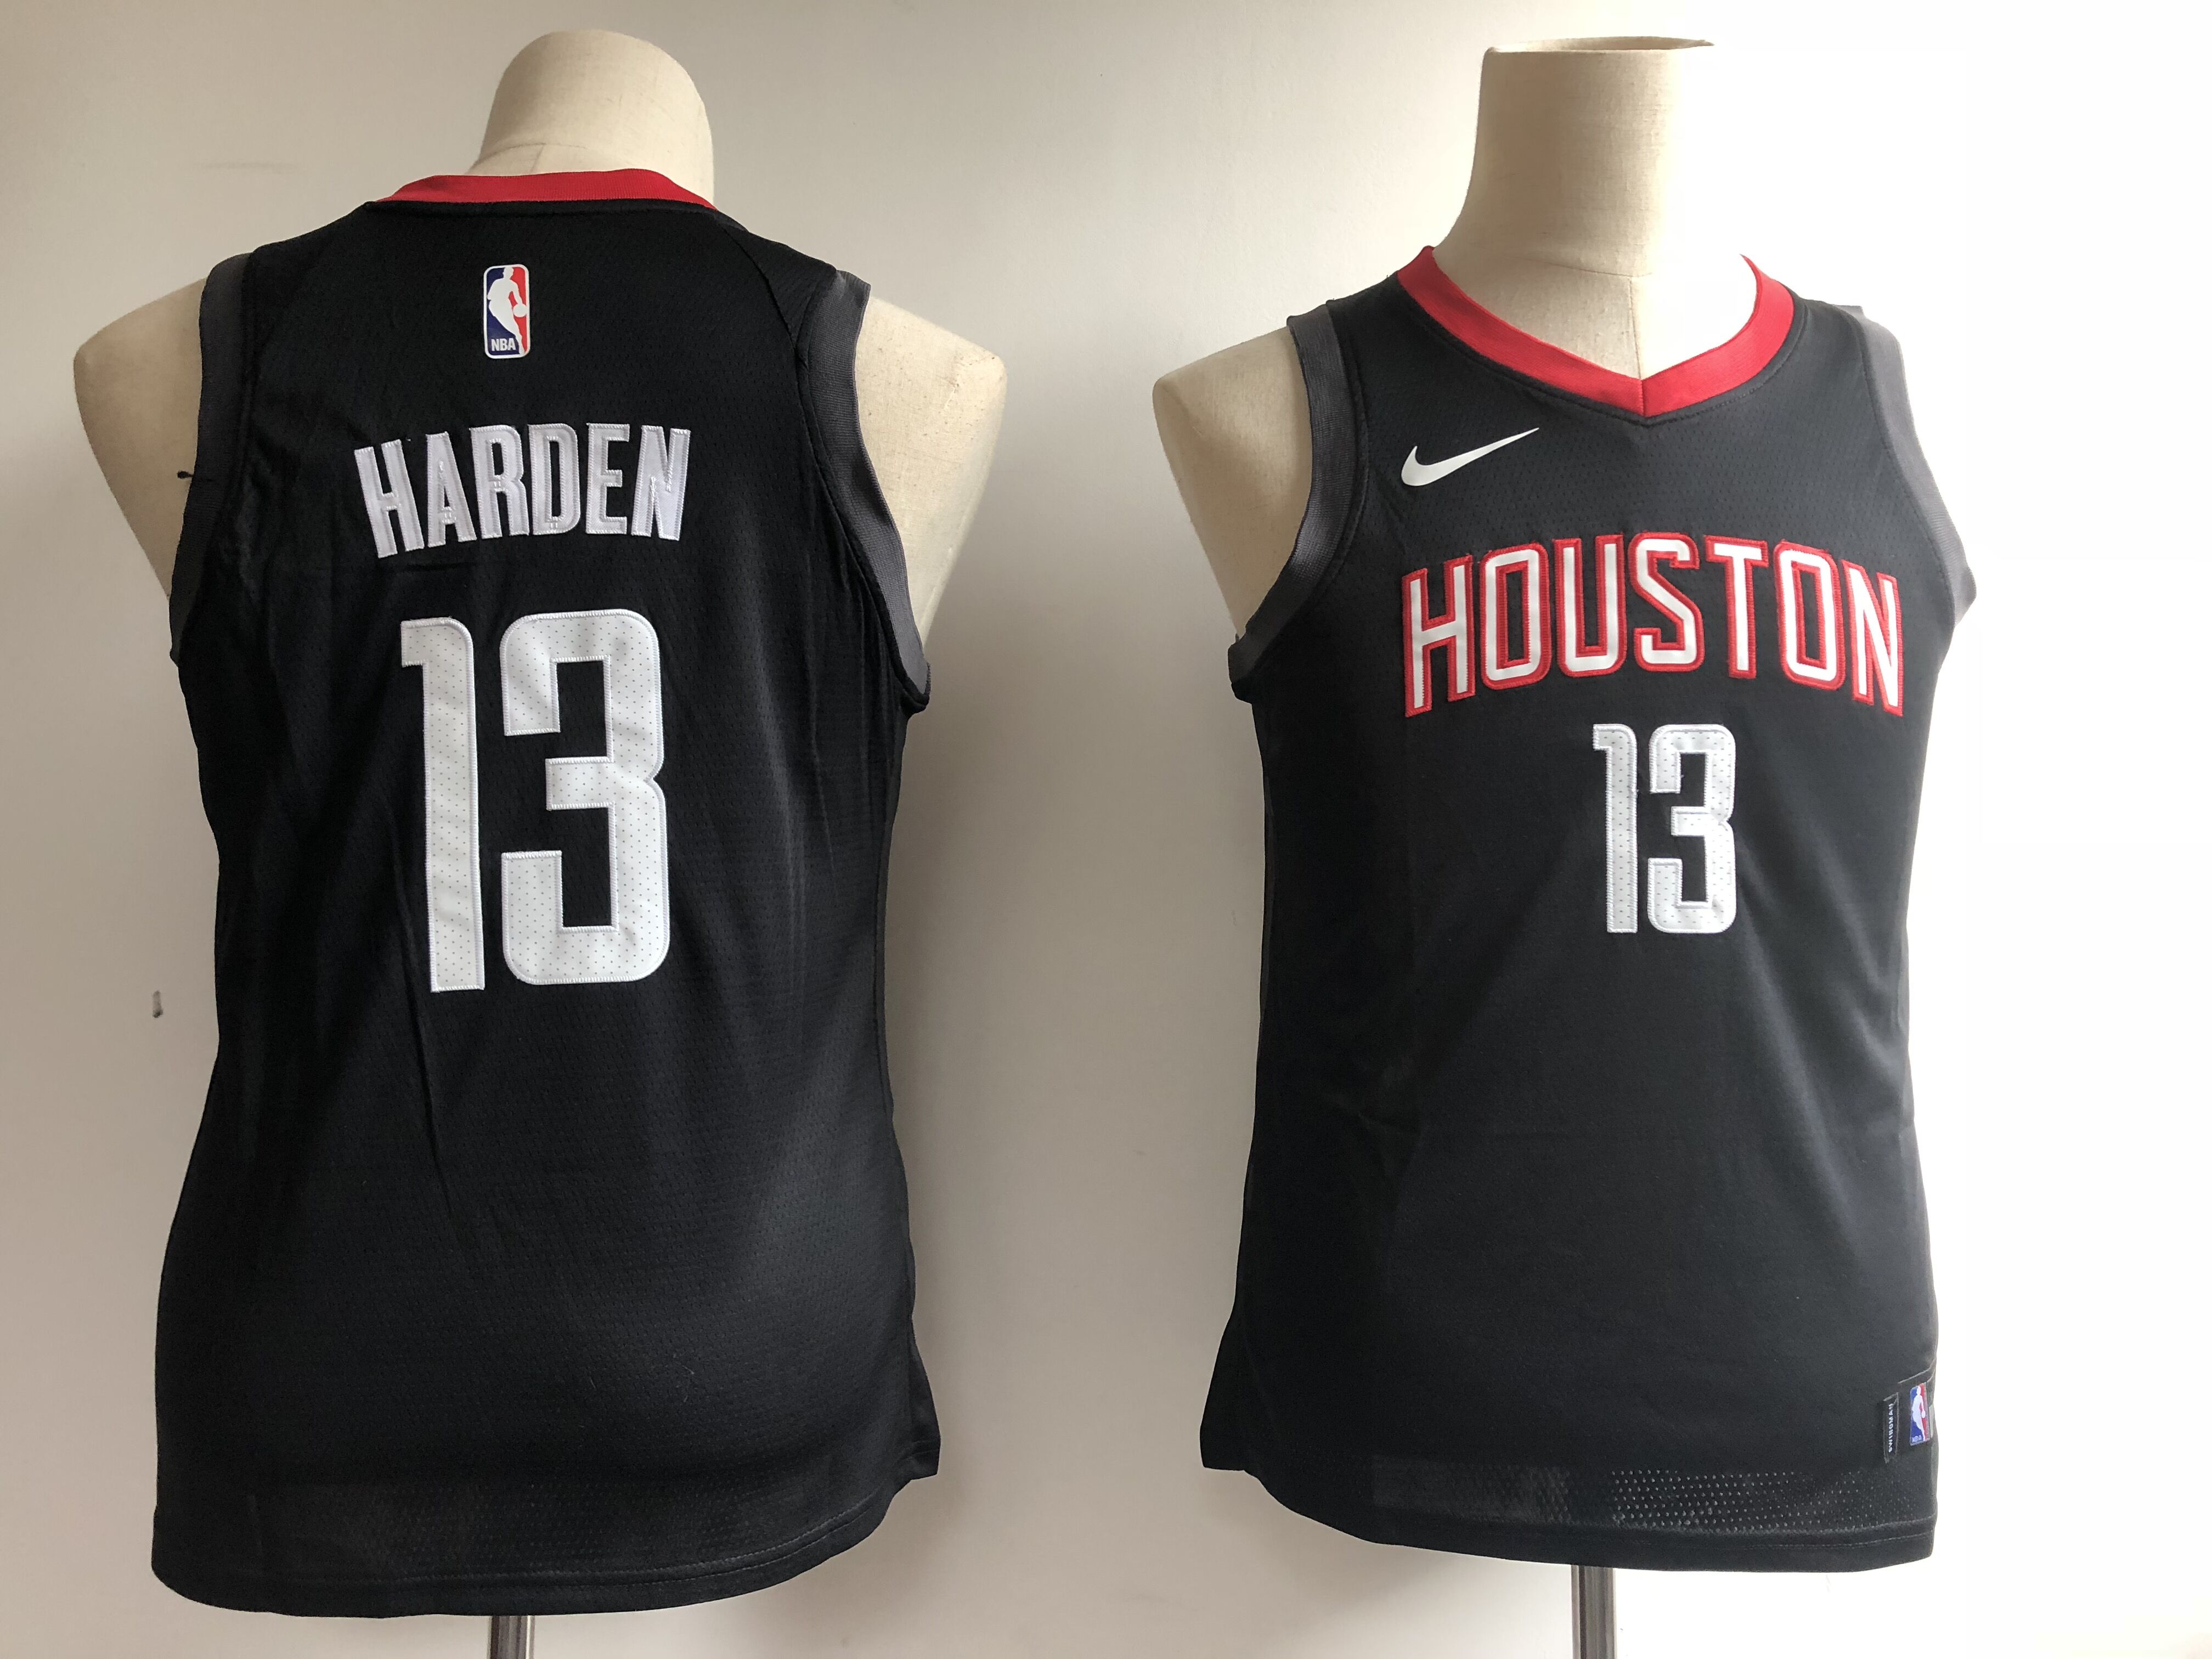 Youth Houston Rockets #13 Harden black NBA Nike Jerseys